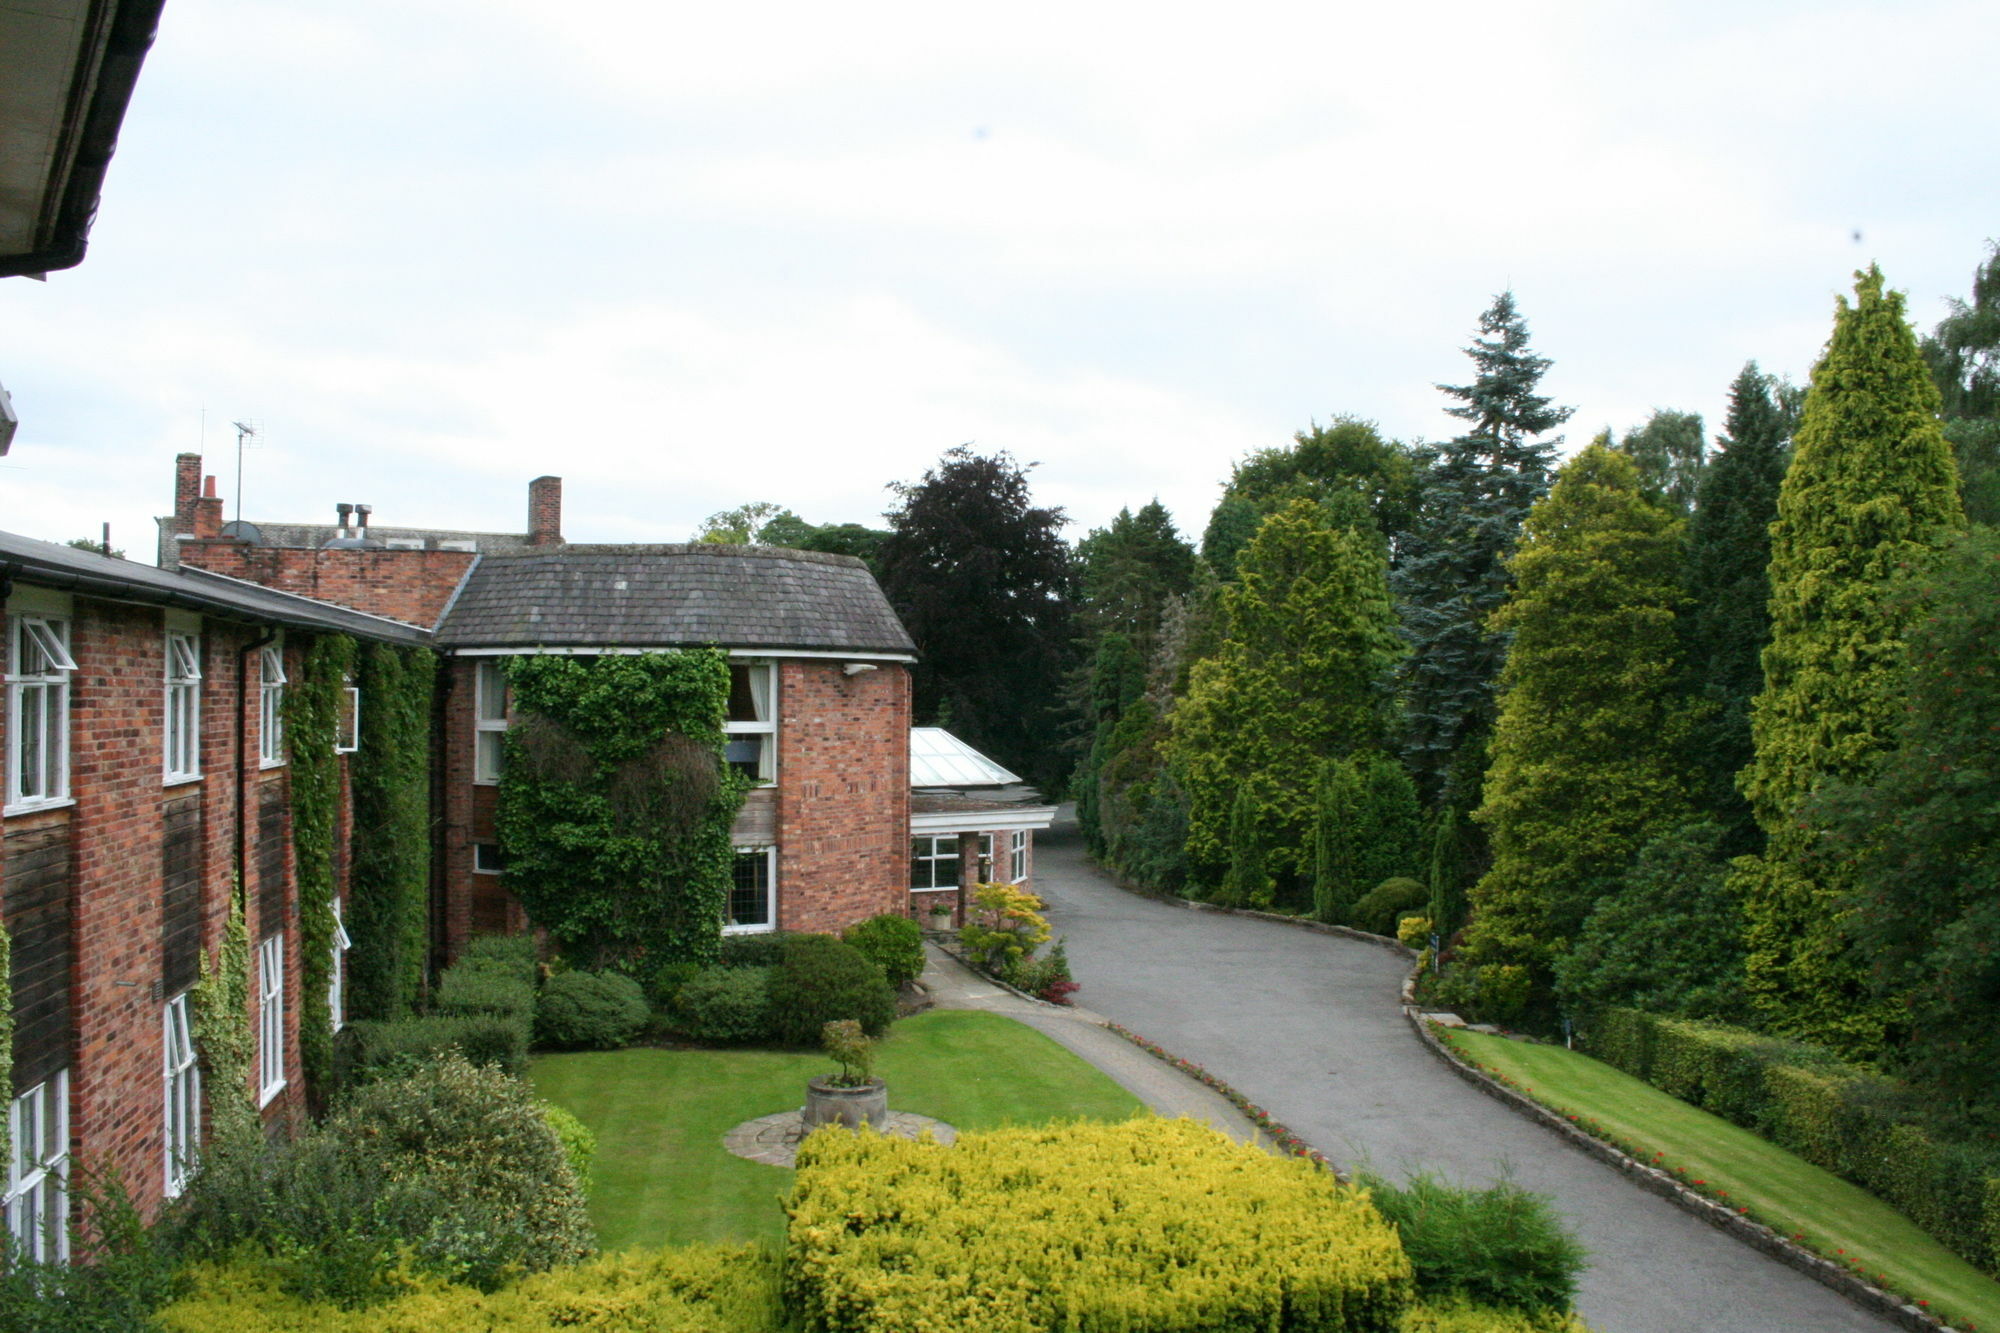 The Stanneylands Hotel Wilmslow Exterior photo